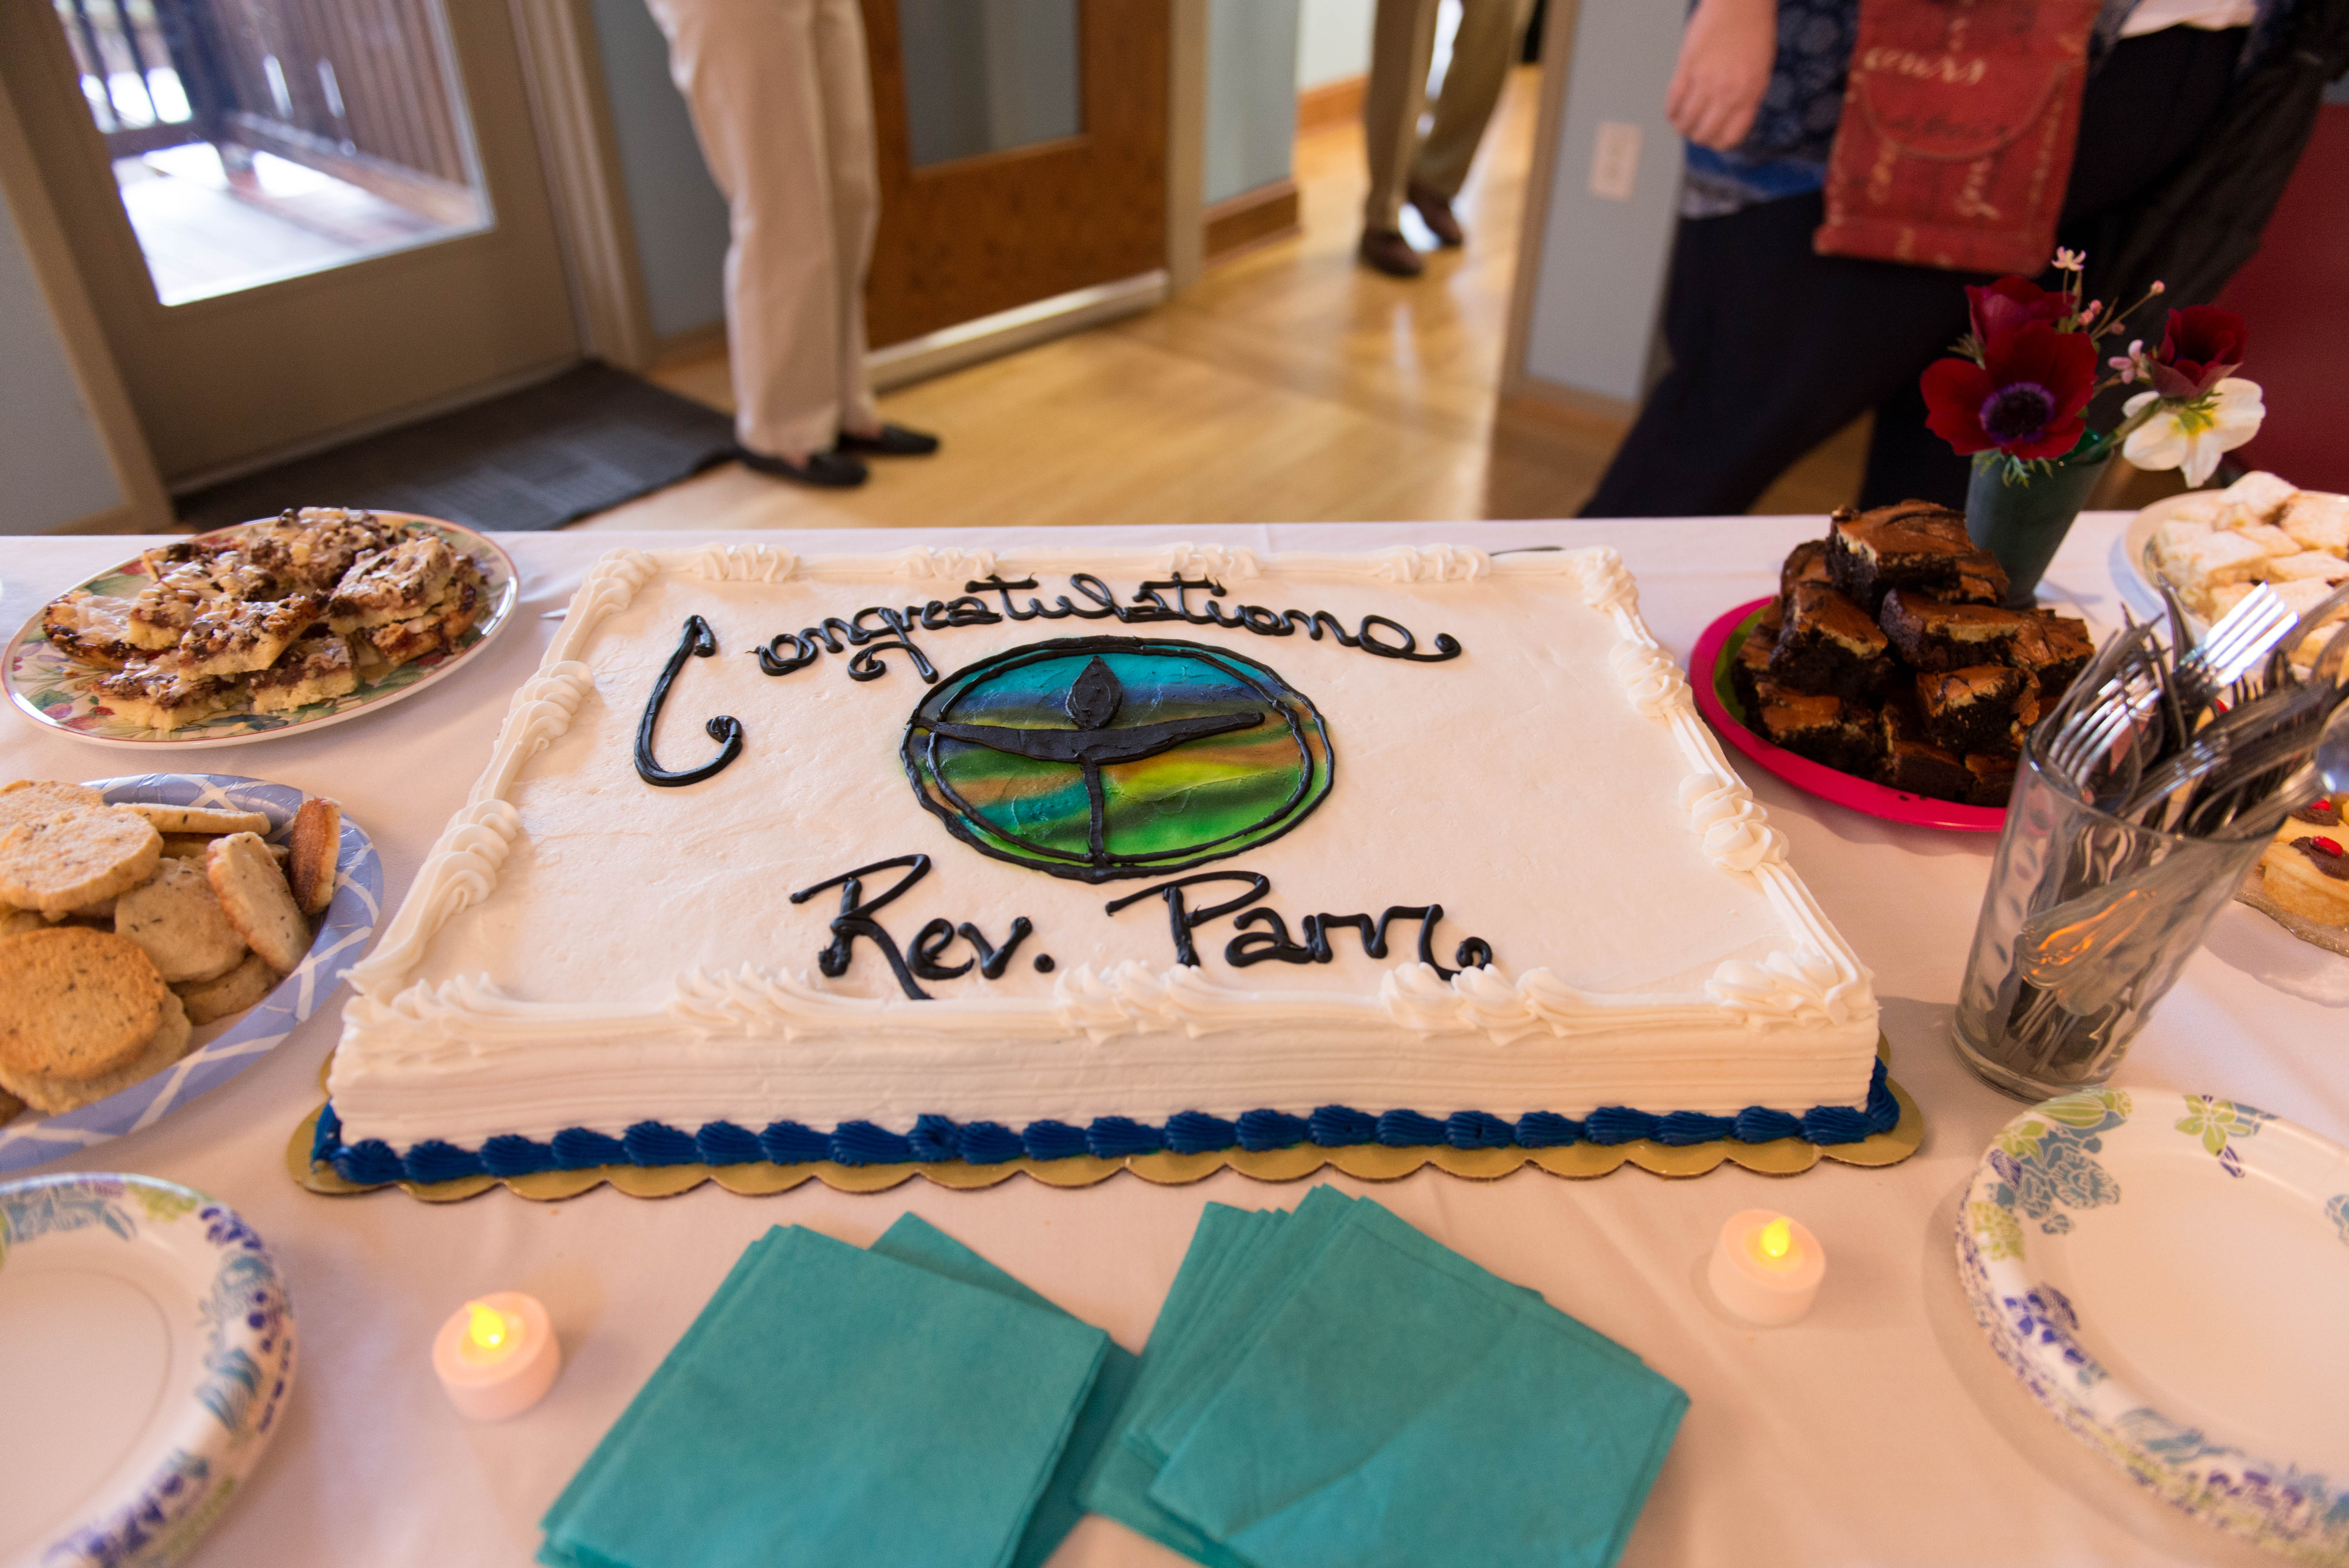 Rev. Pam's cake